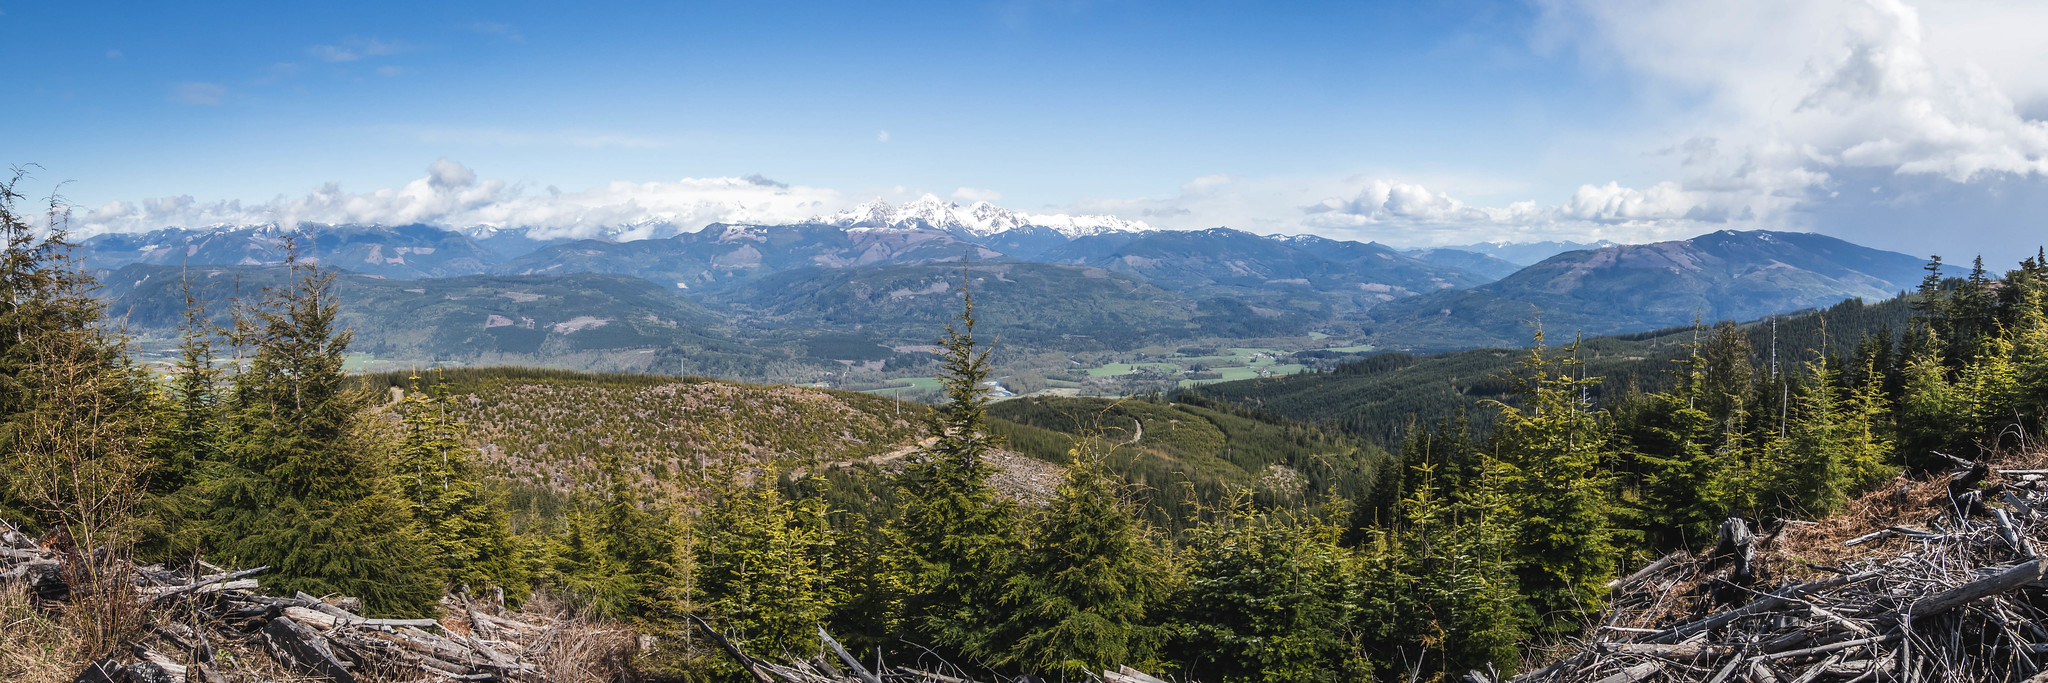 East panorama below Haner Mountain